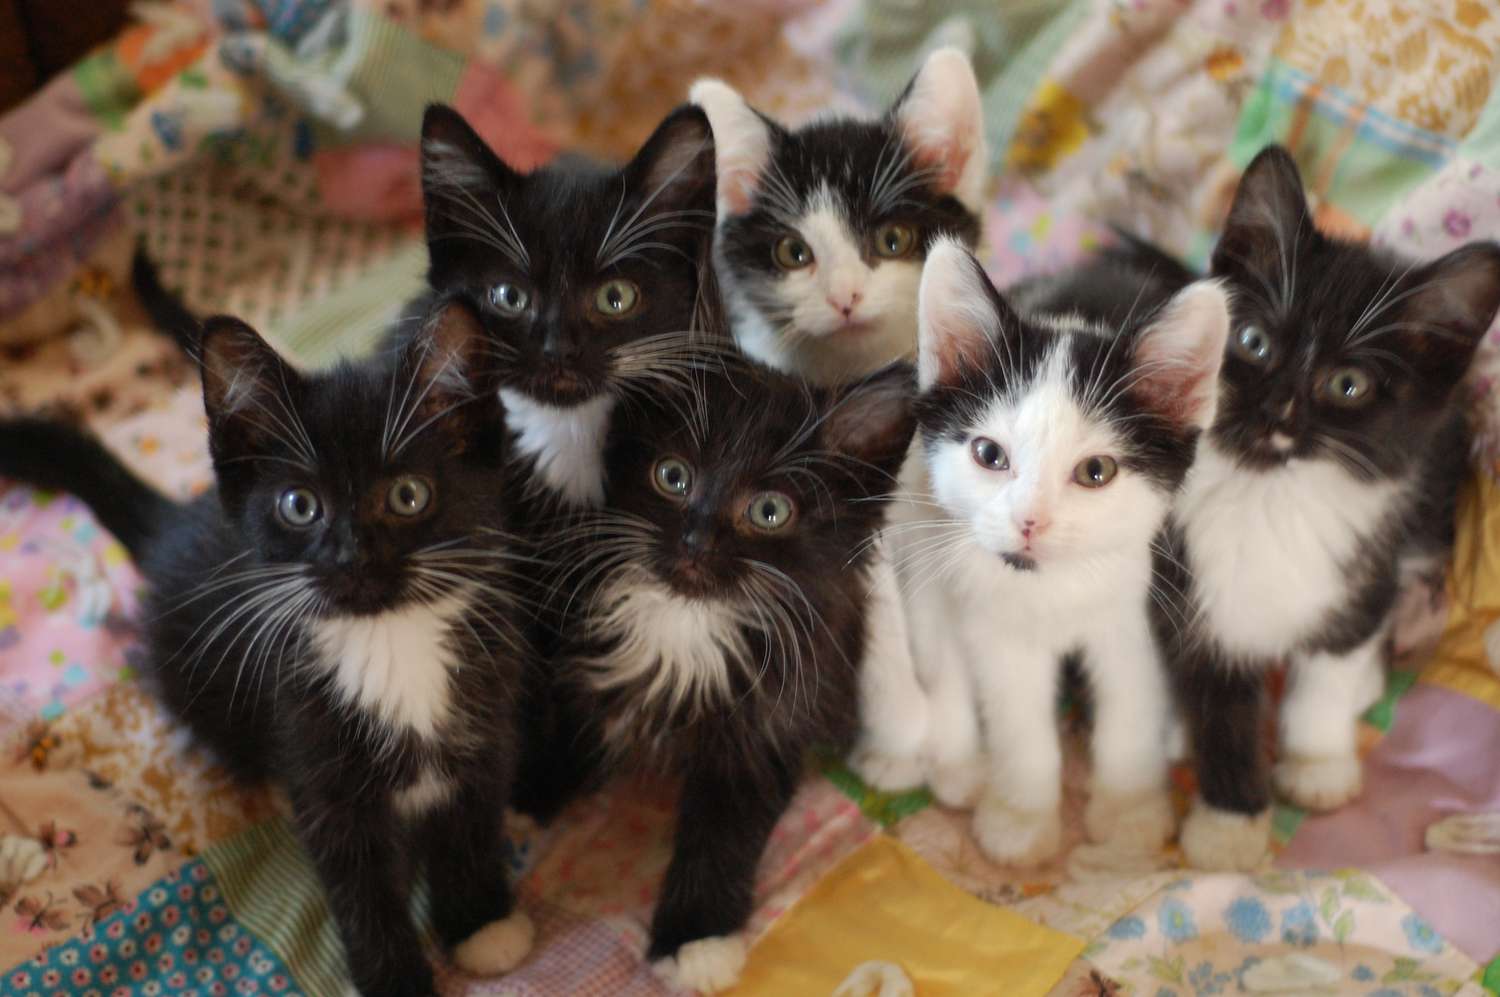 Black and white kittens on quilt